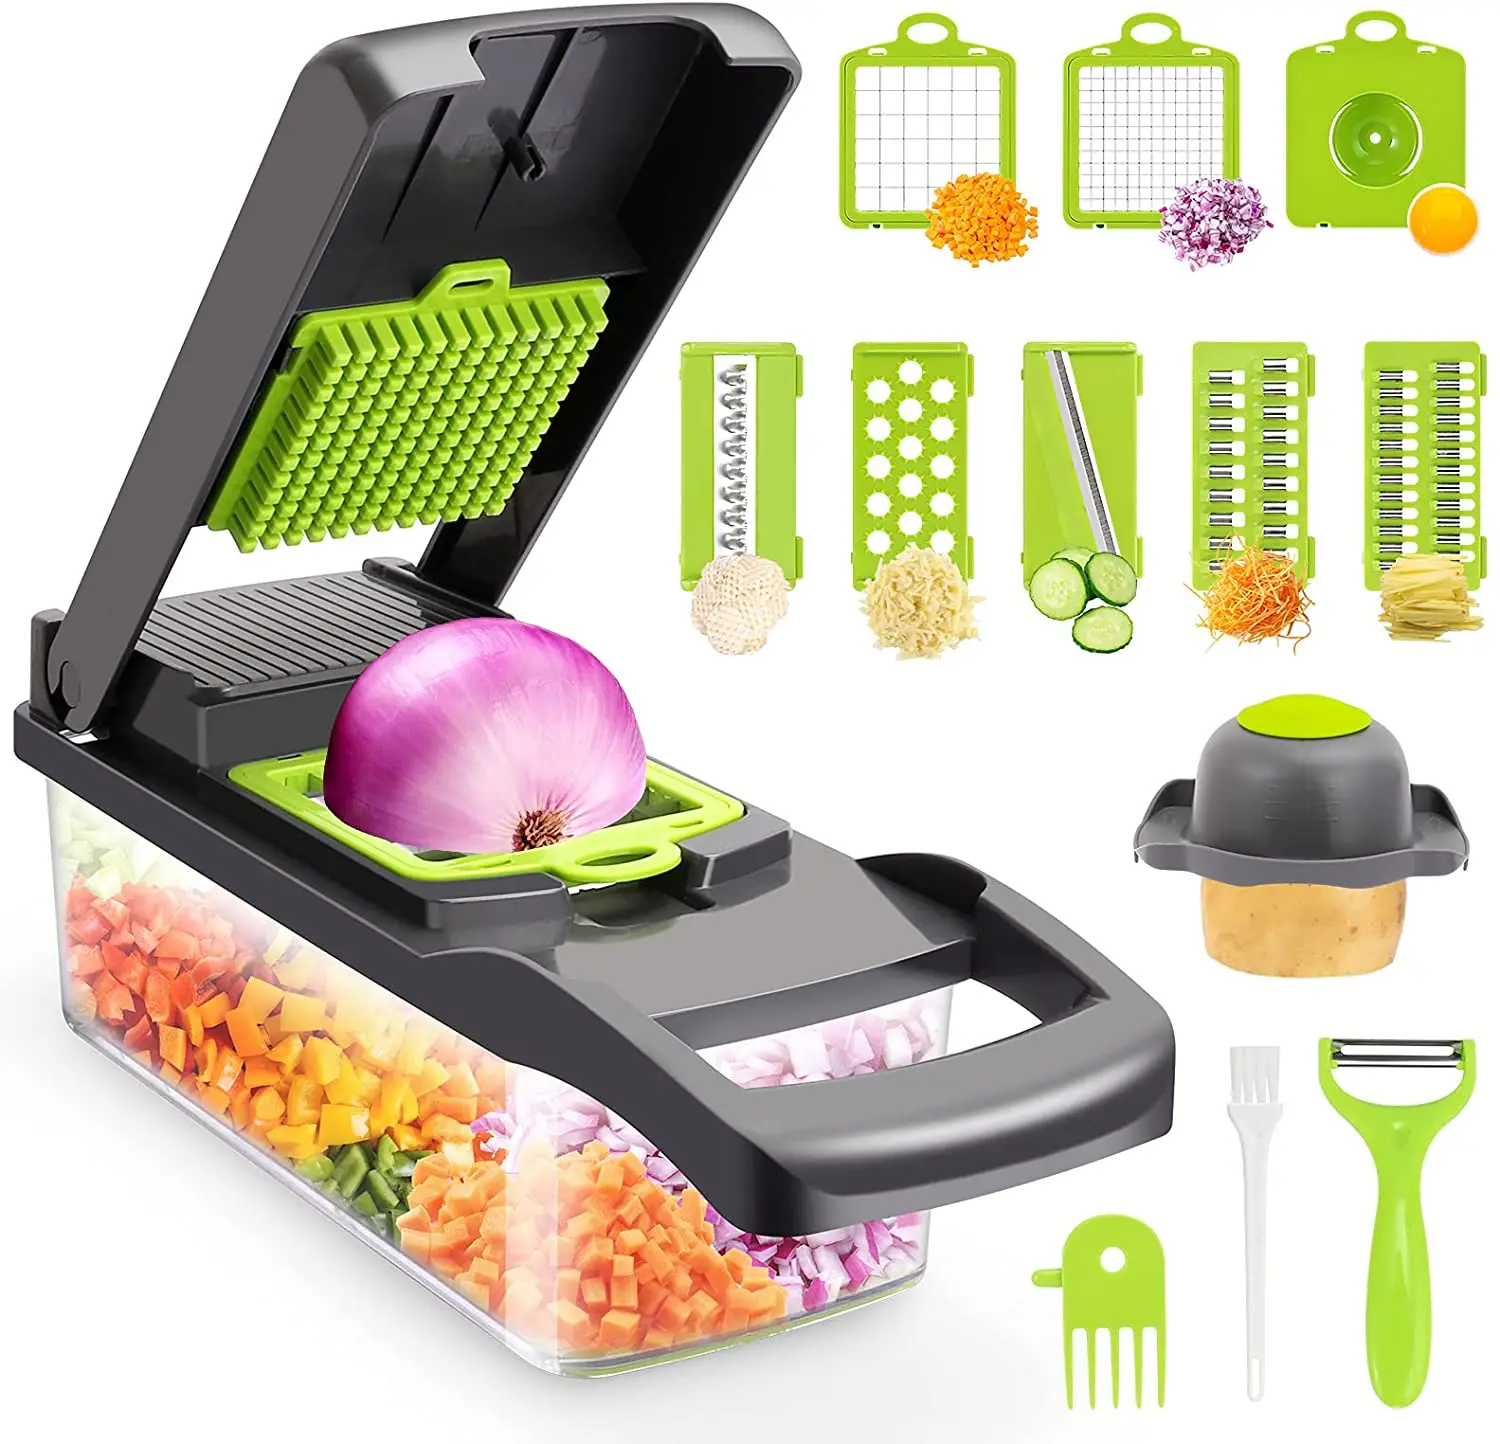 

Multifunctional vegetable cutter, fruit slicer, drain basket slicer, 13 in 1 grater, garlic press, peeler, kitchen accessories